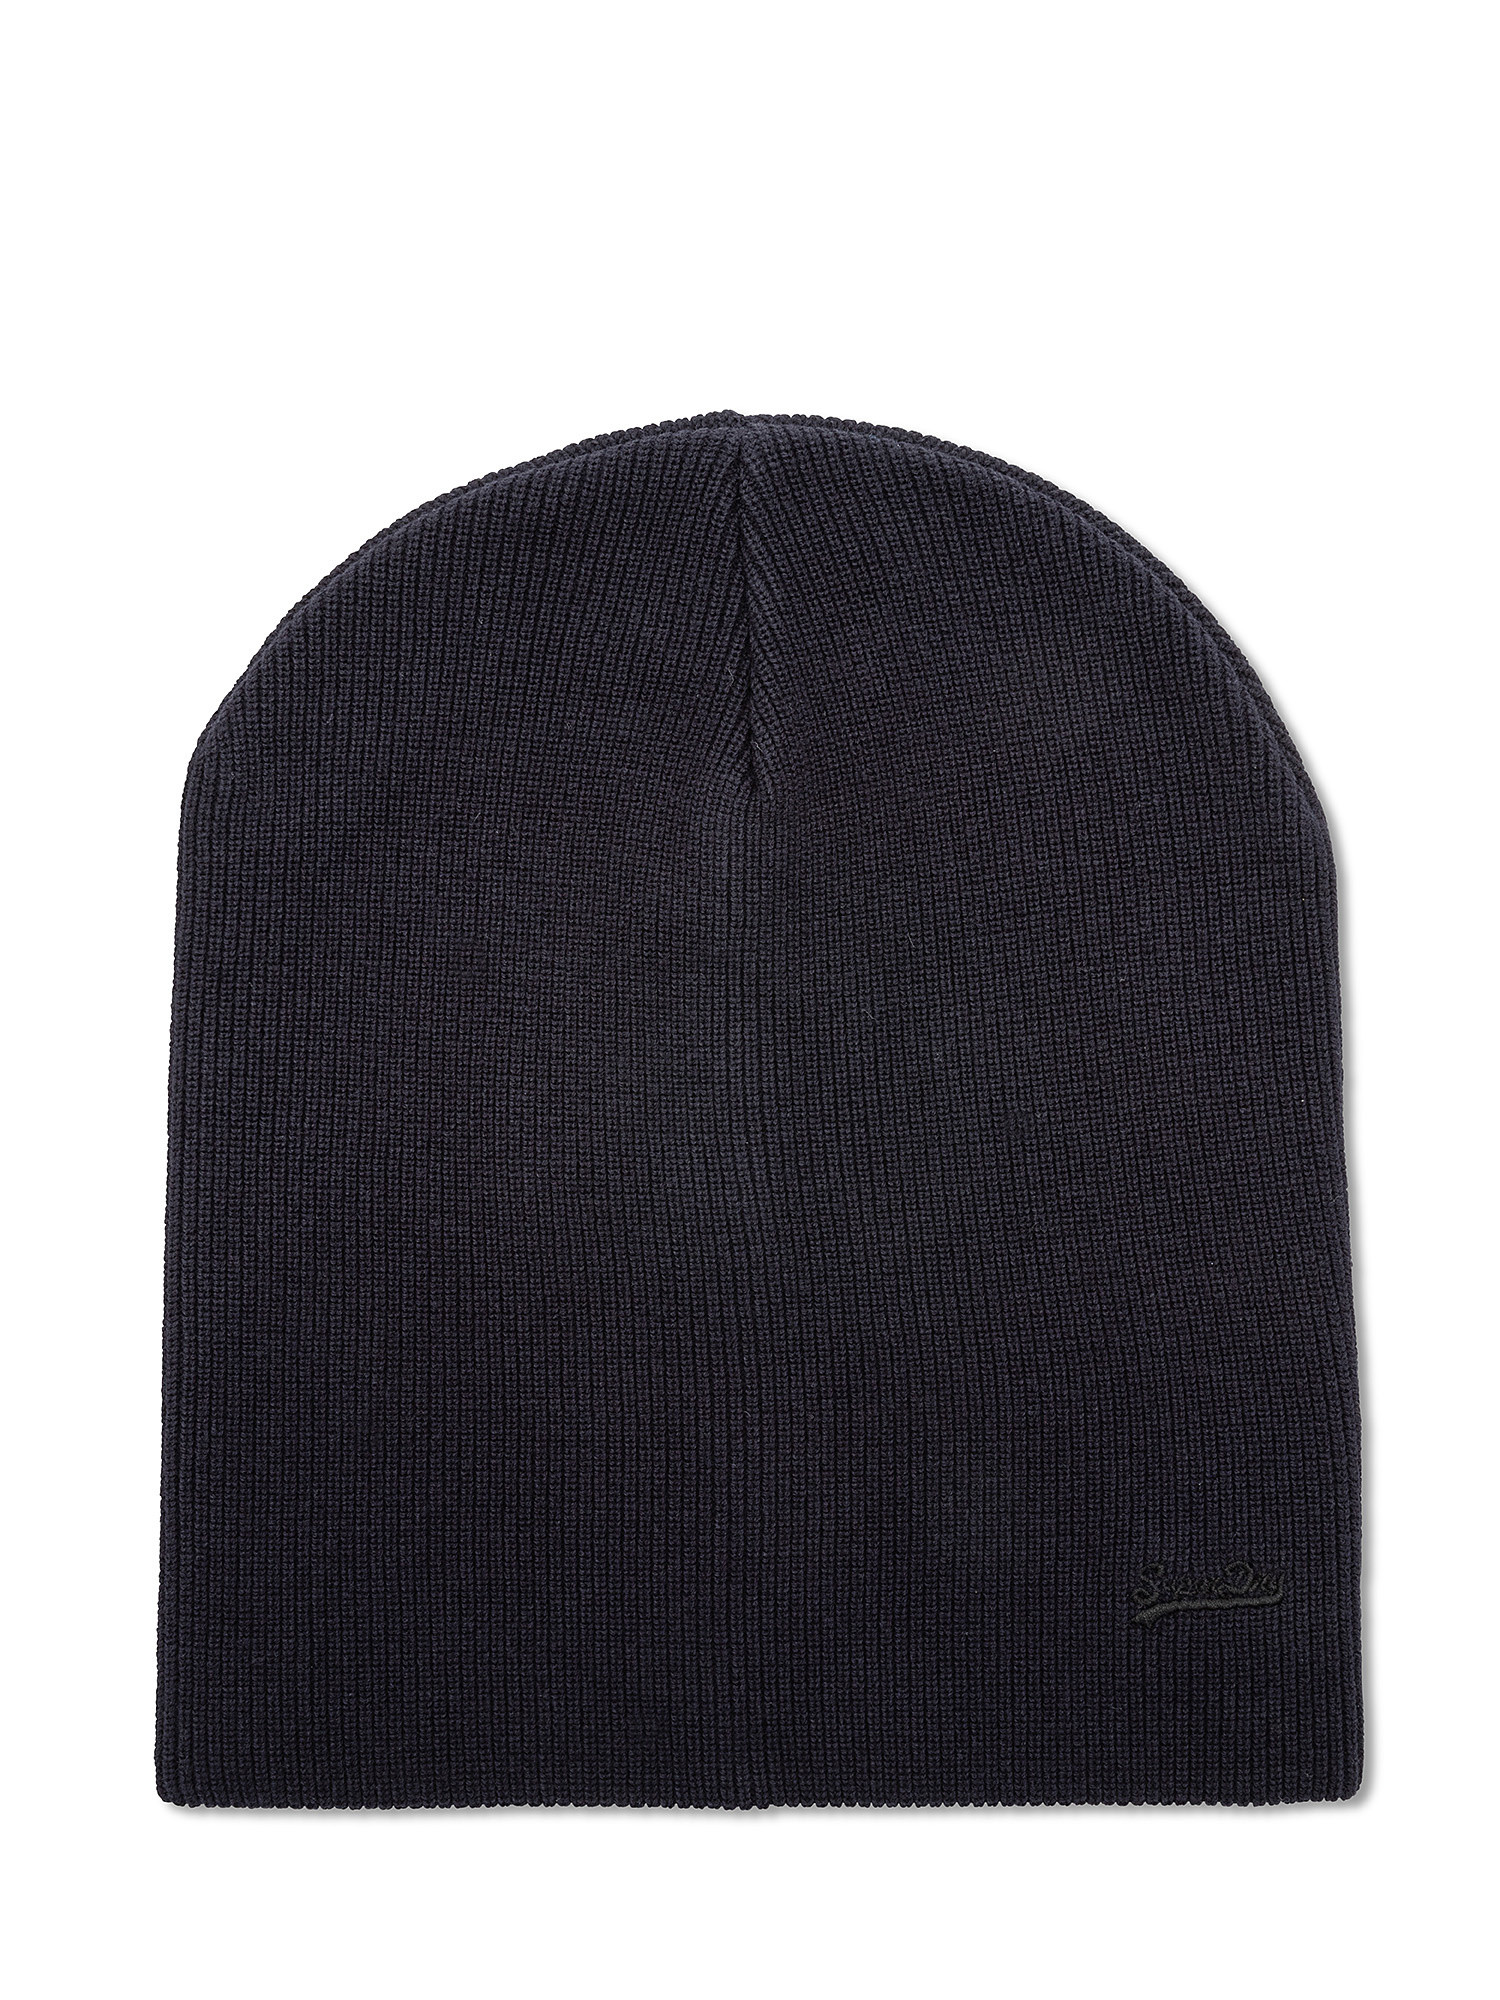 Superdry - Cotton cap, Dark Blue, large image number 0